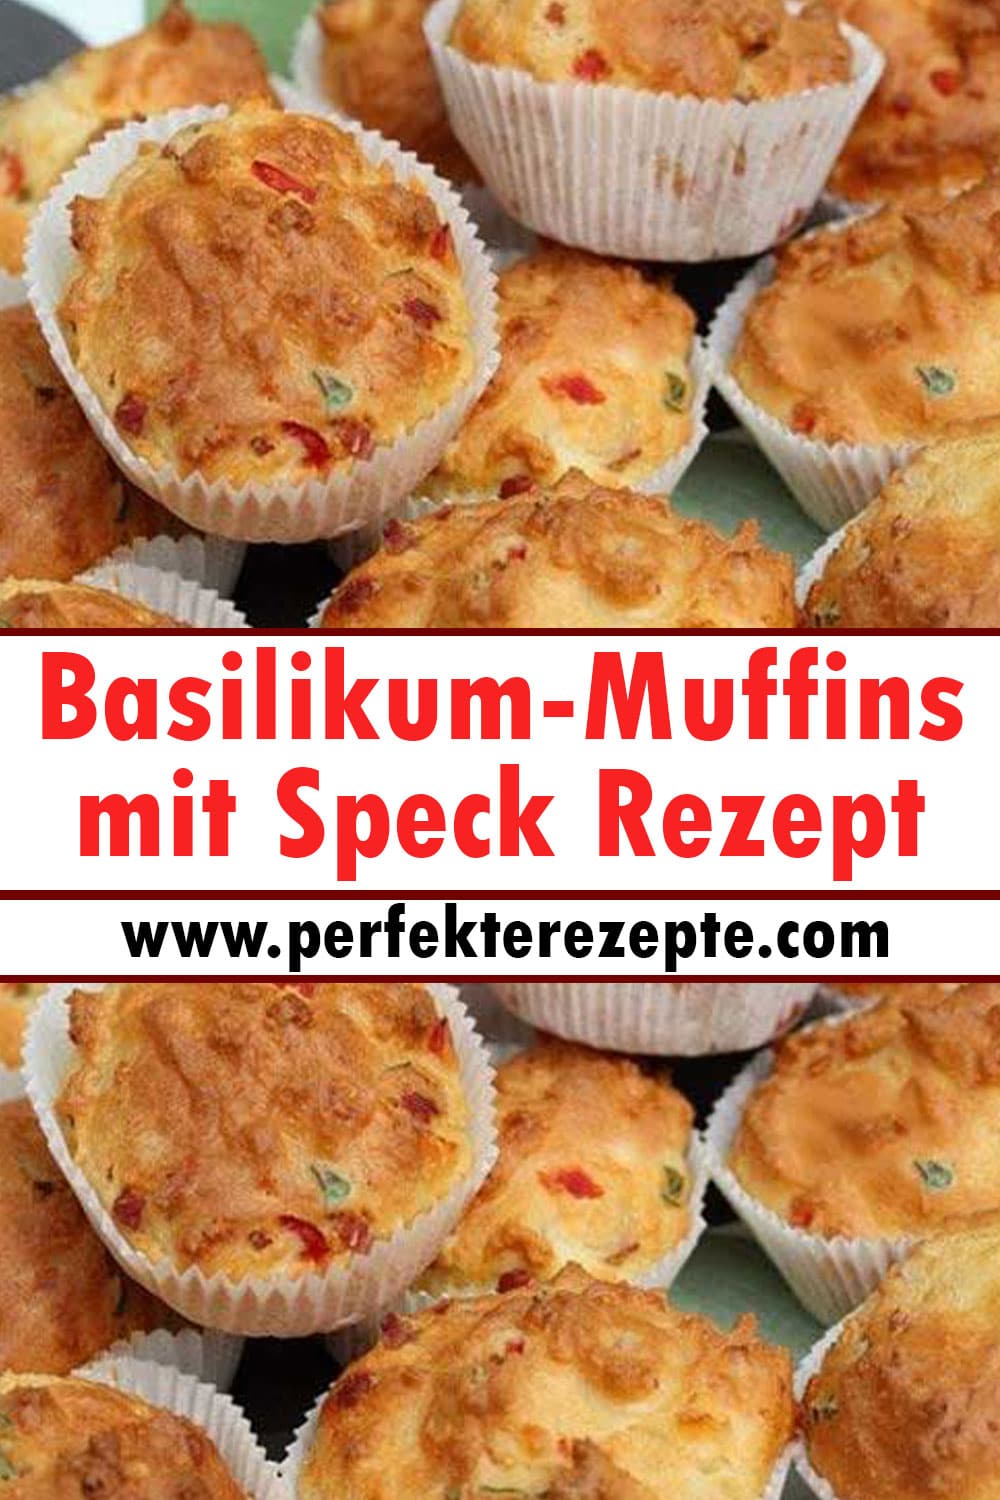 Basilikum-Muffins mit Speck Rezept